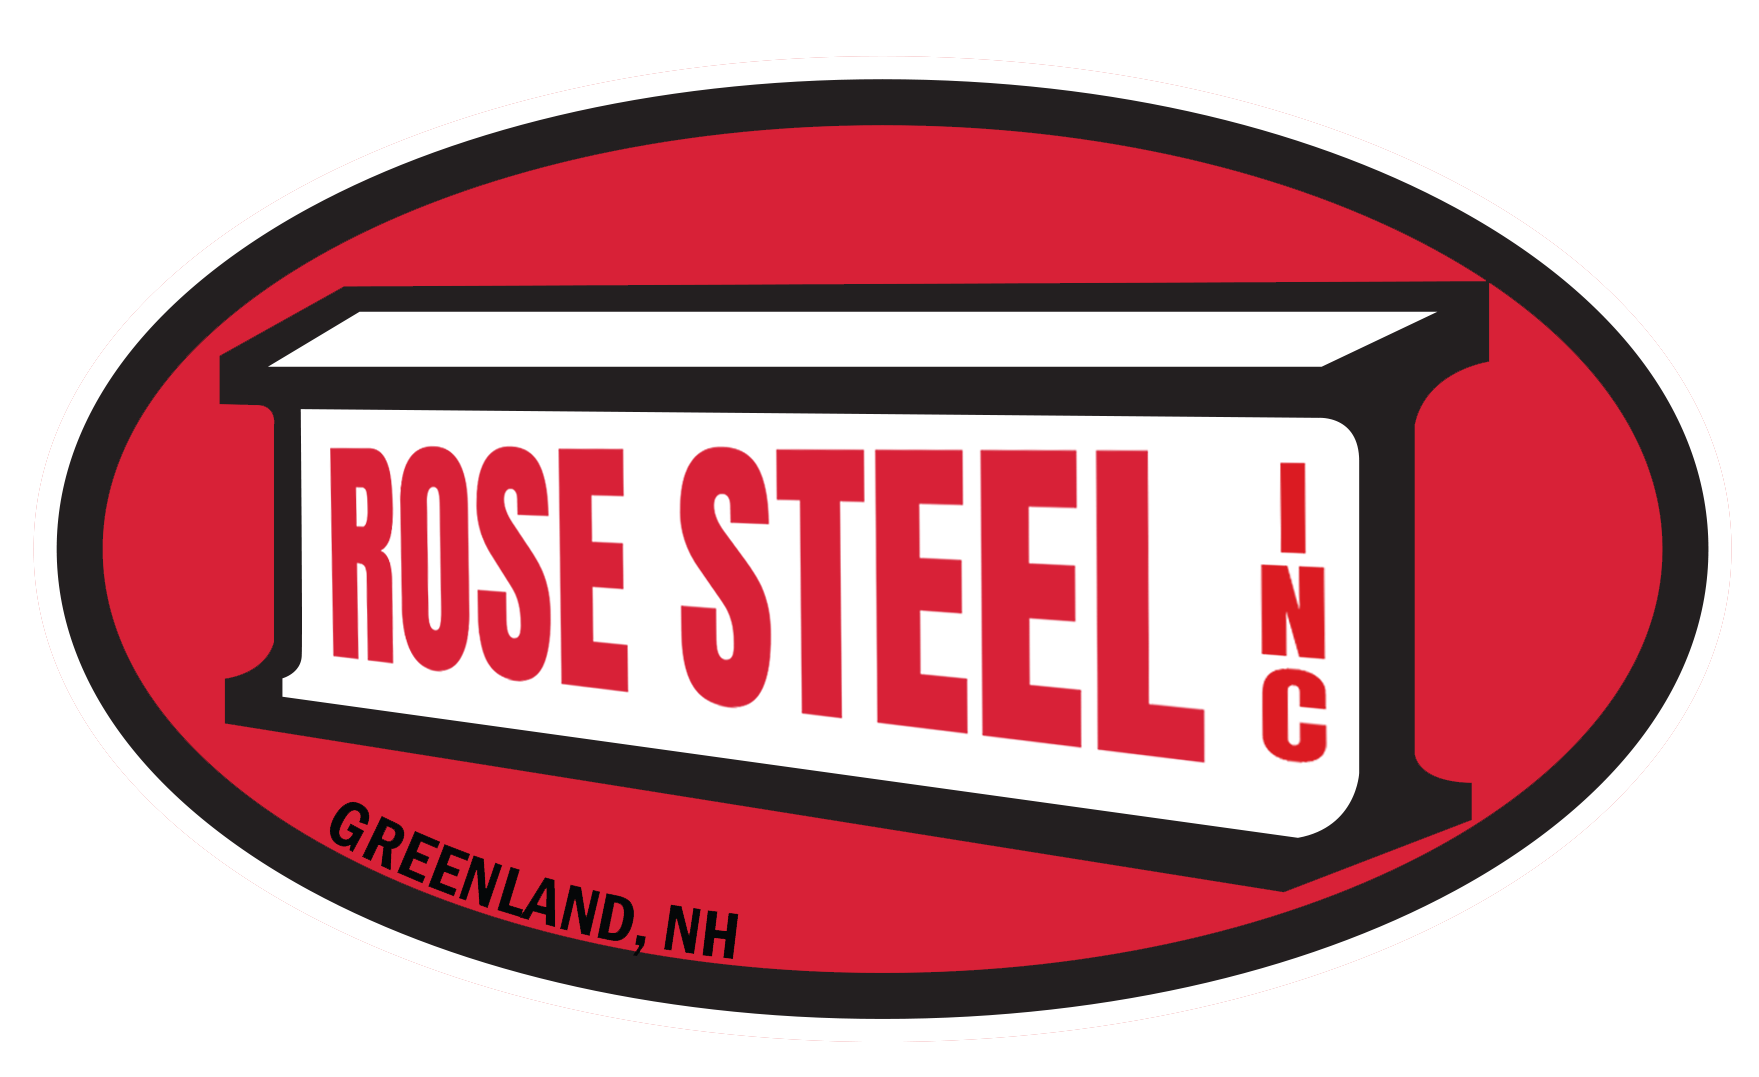 Rose Steel sister company steel erection